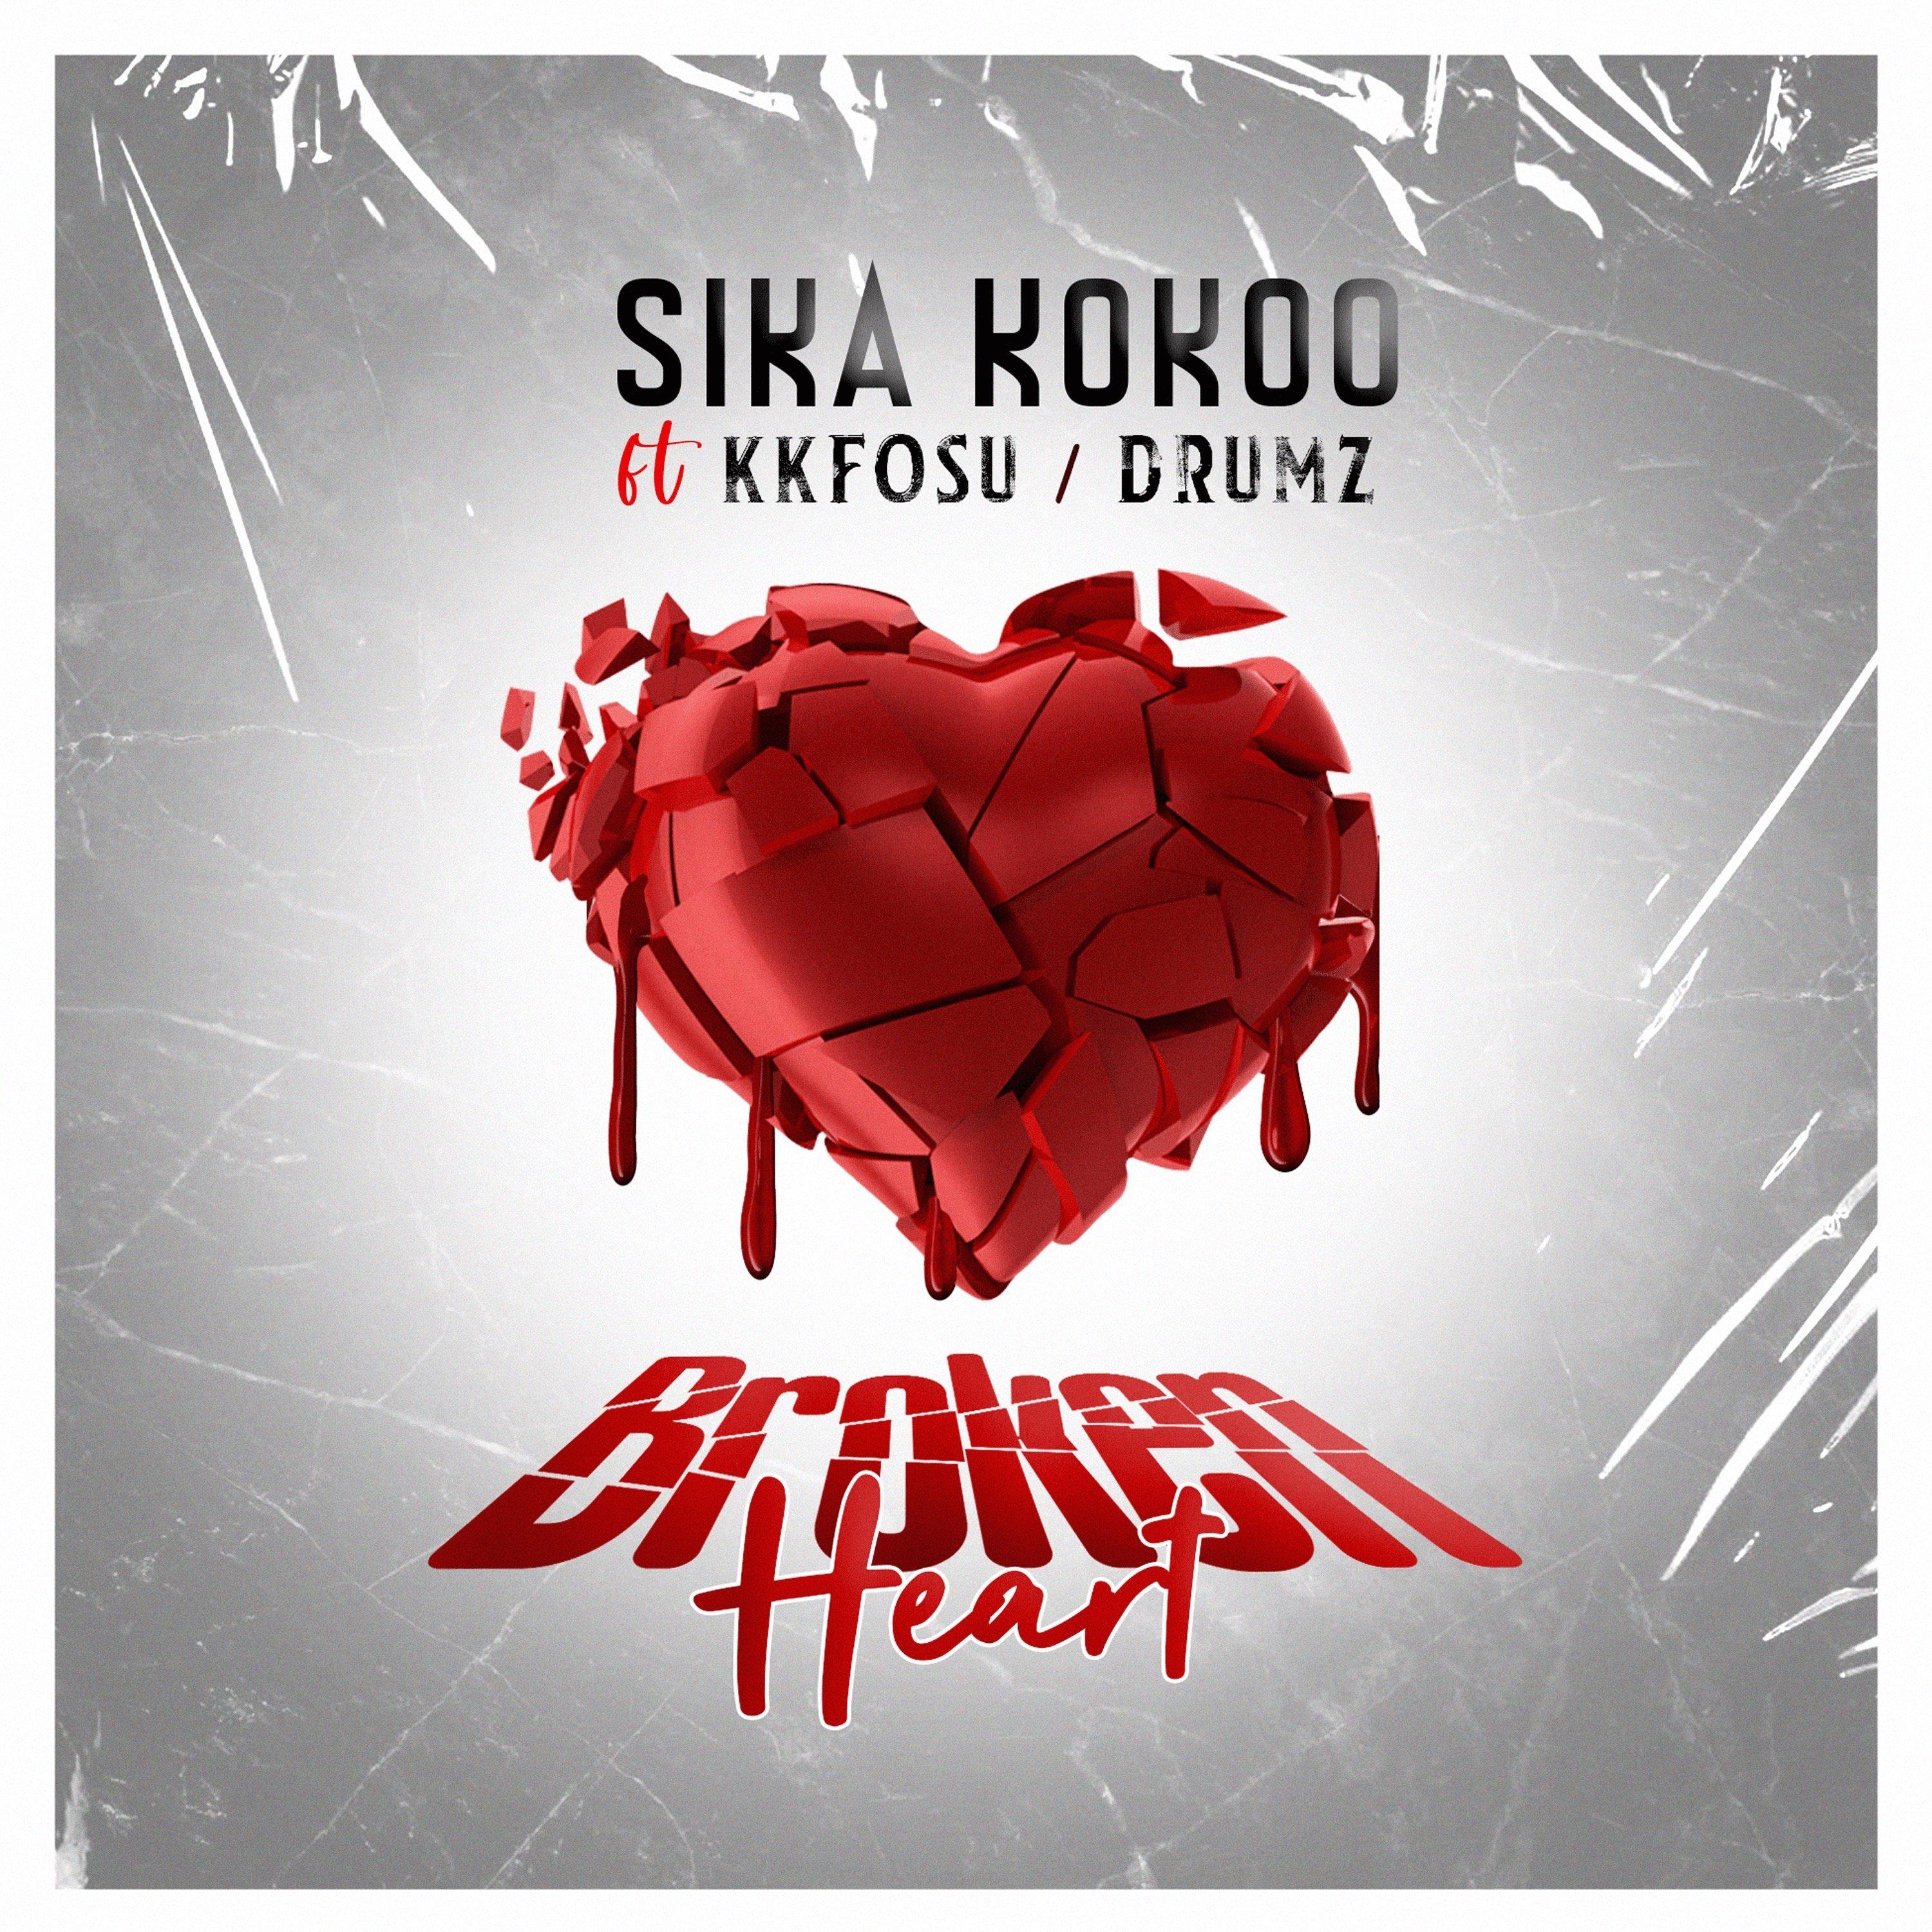 SIKA KOKOO - Broken Heart